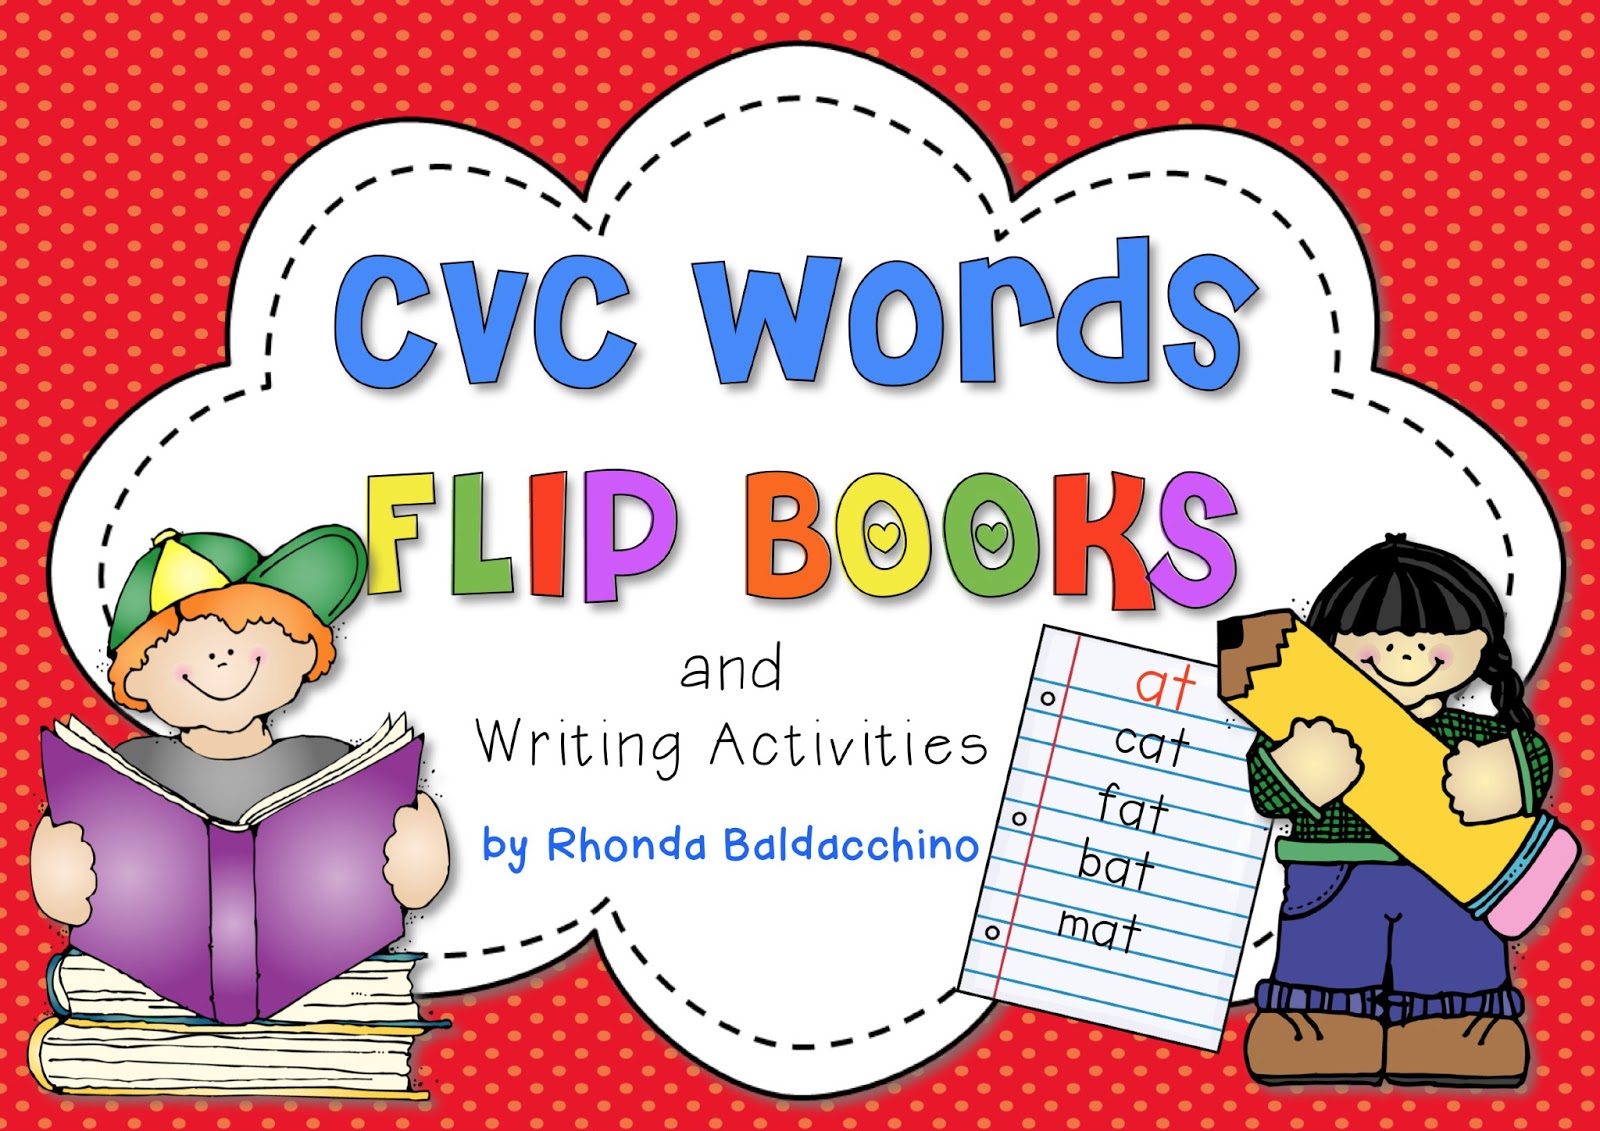 Year book words. CVC Words book. Writing activities. CVC books pdf. Handwriting activity.